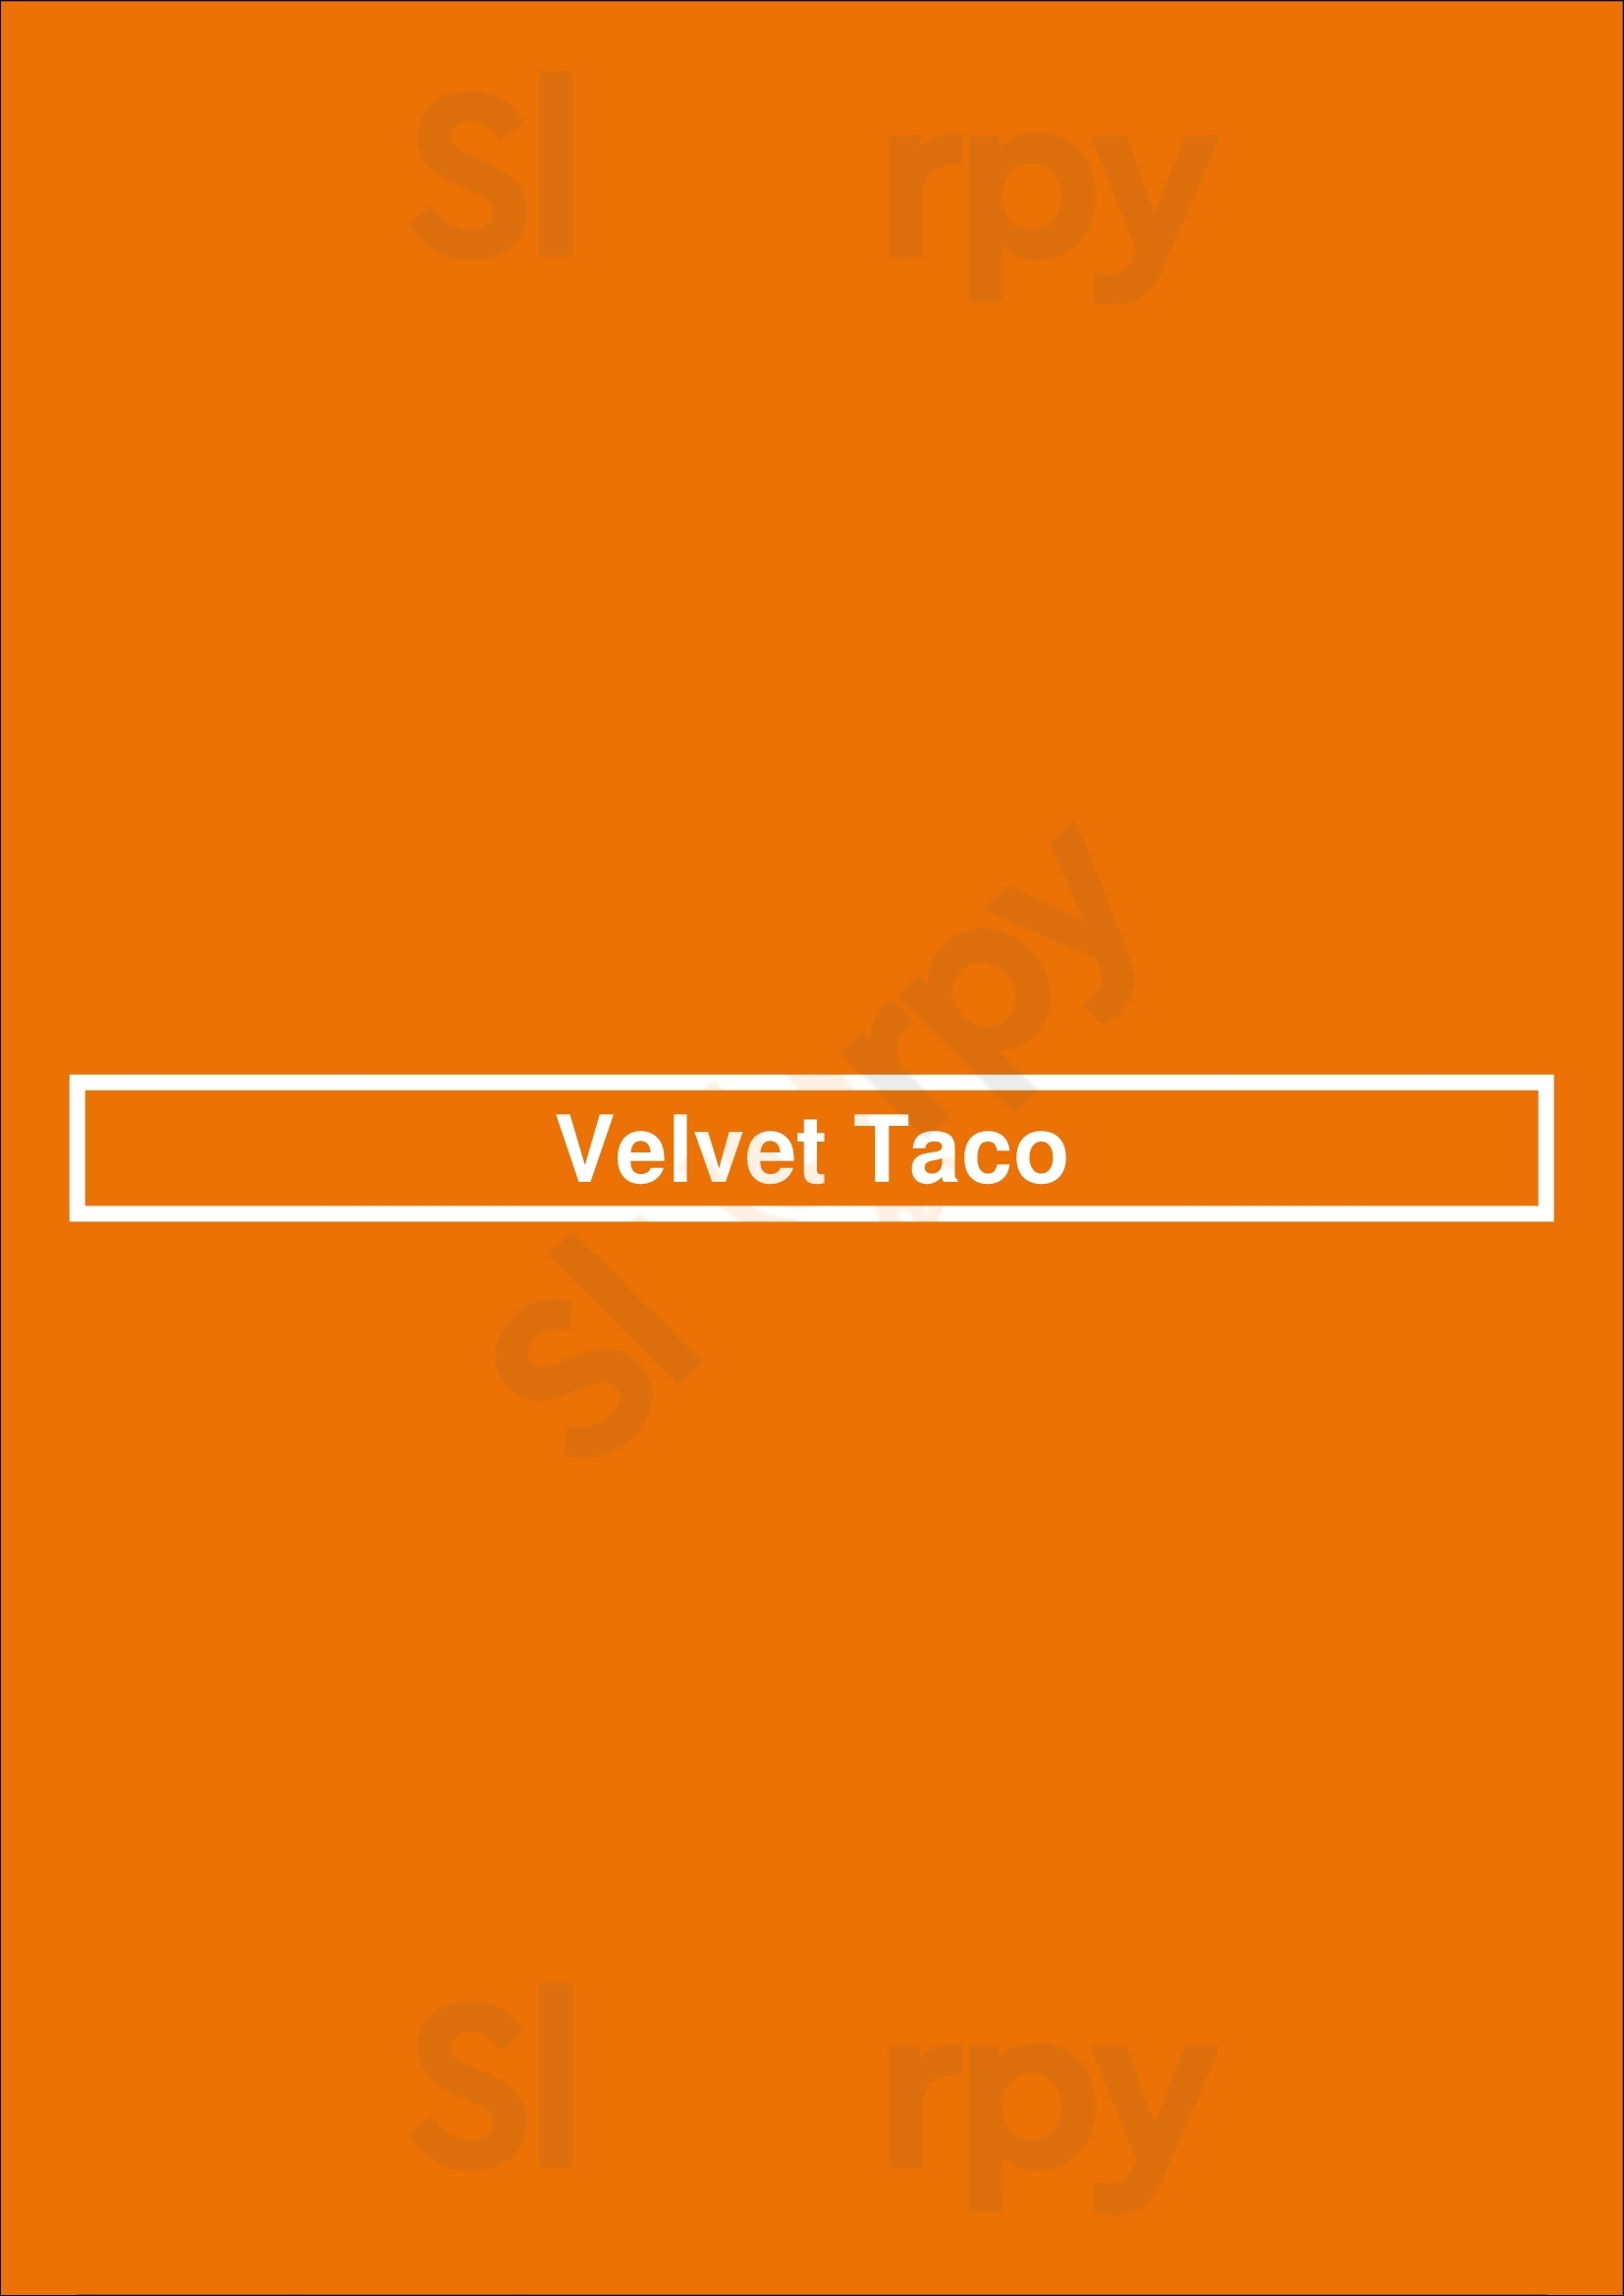 Velvet Taco Austin Menu - 1